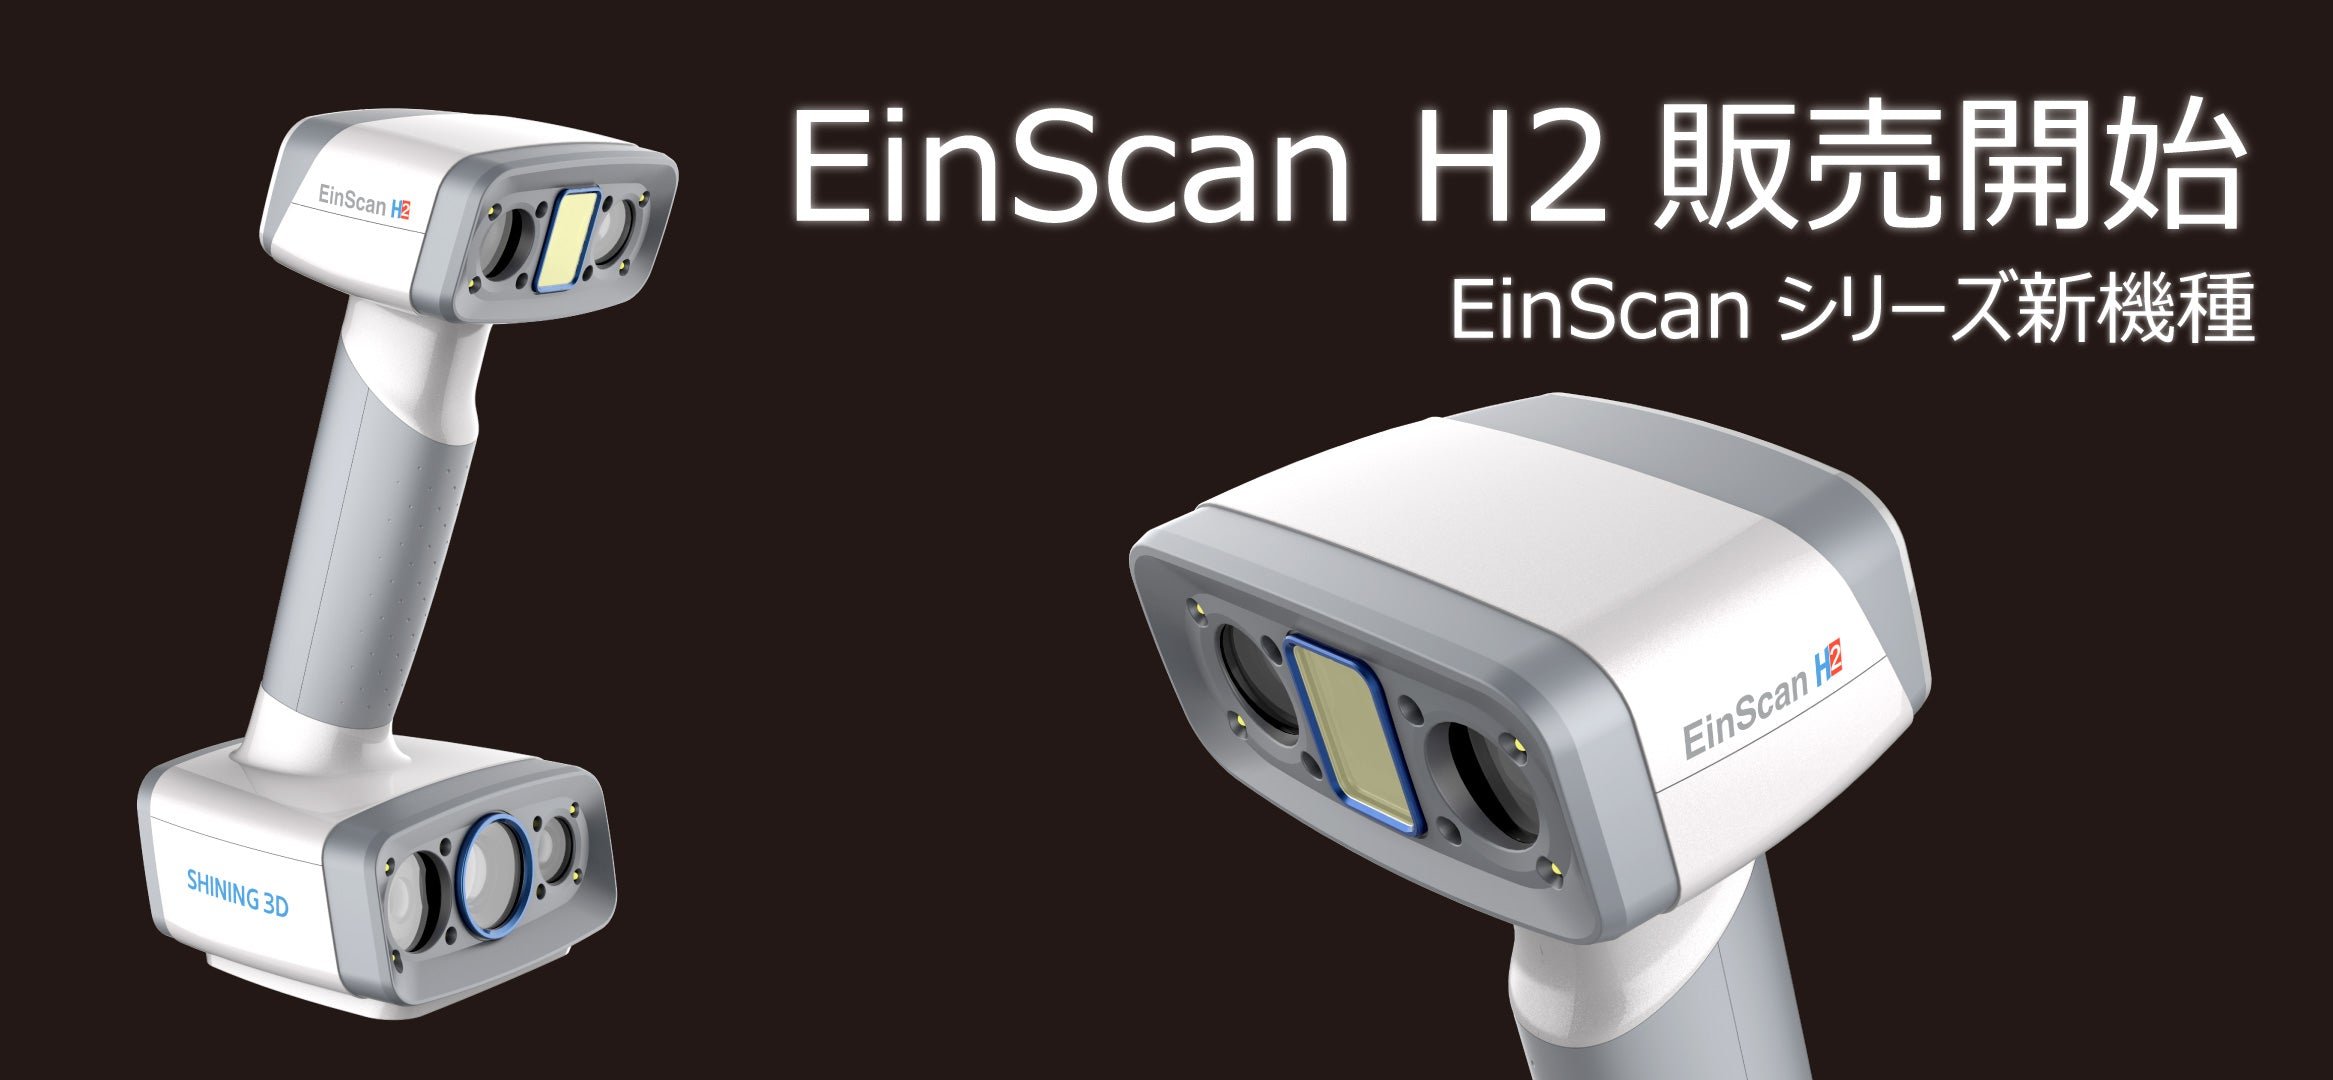 EinScan H2販売開始